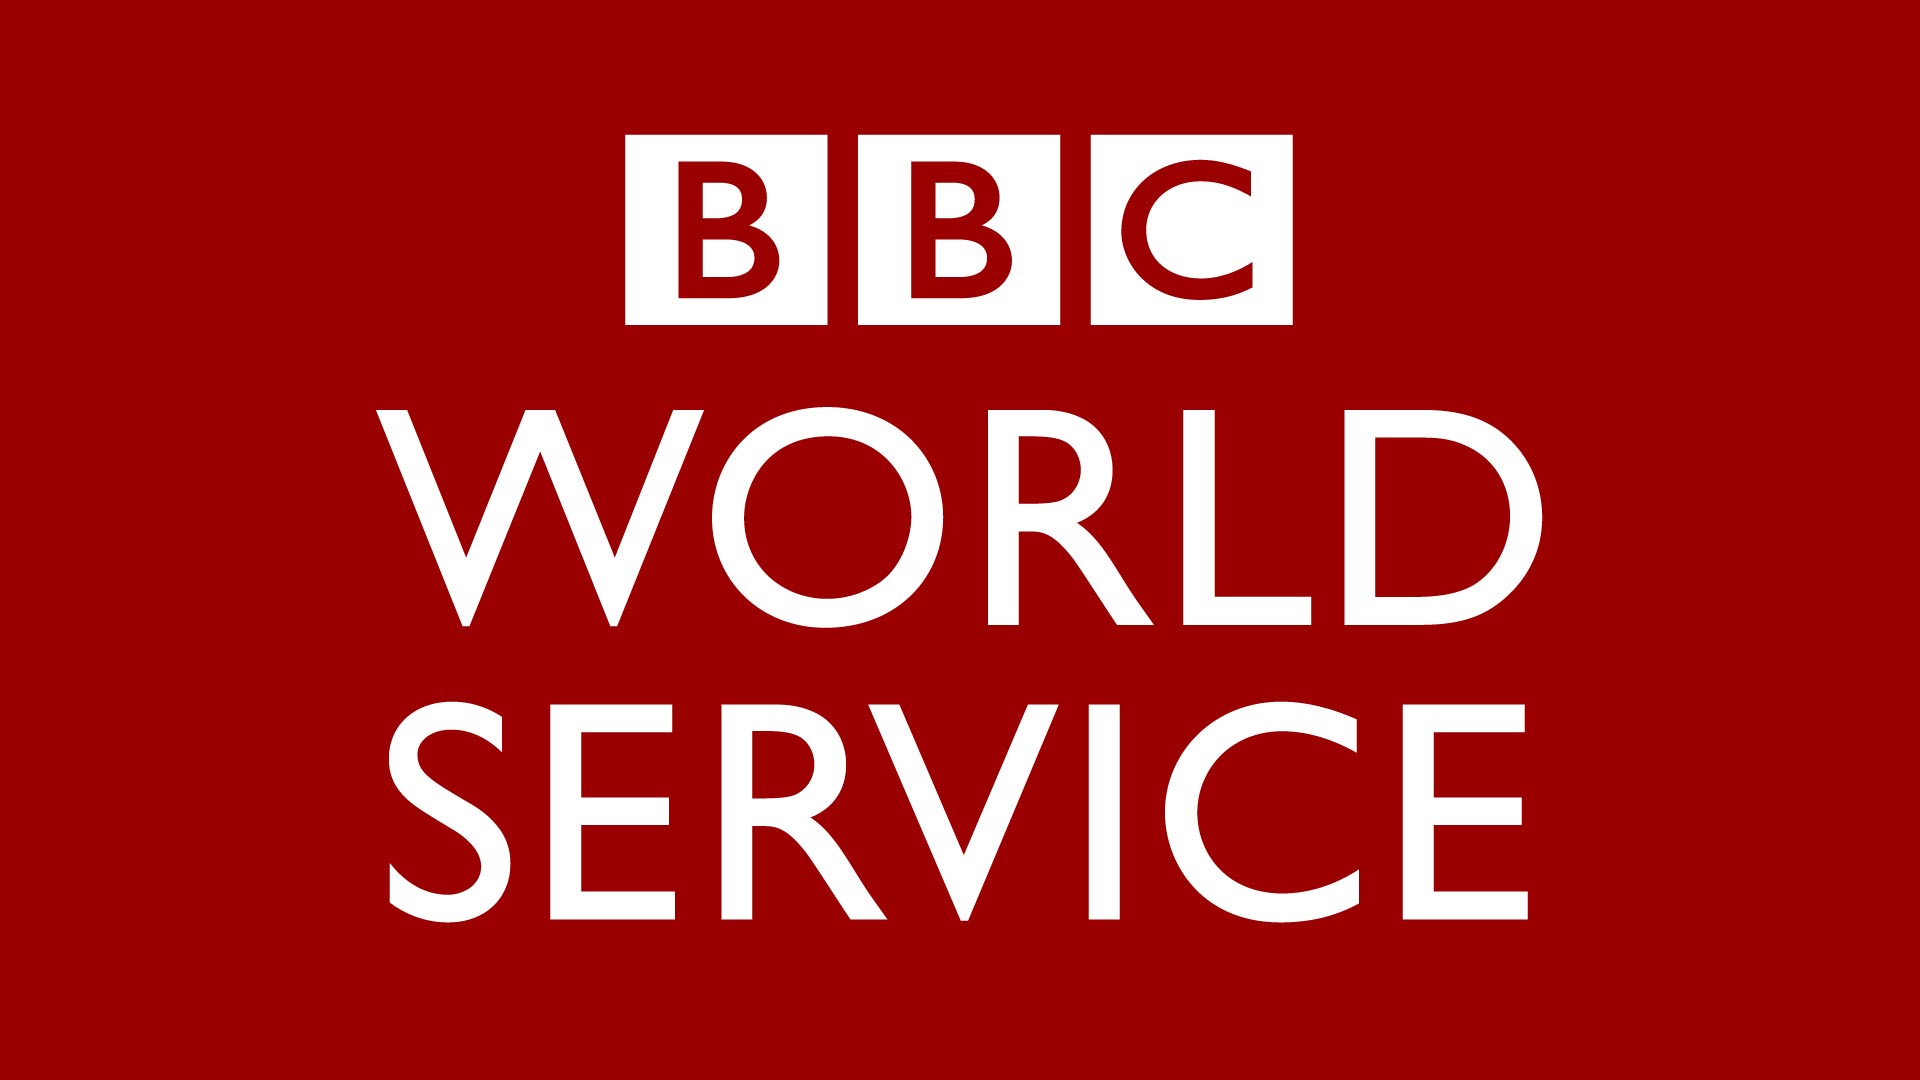 bbc_wrold_service_radio